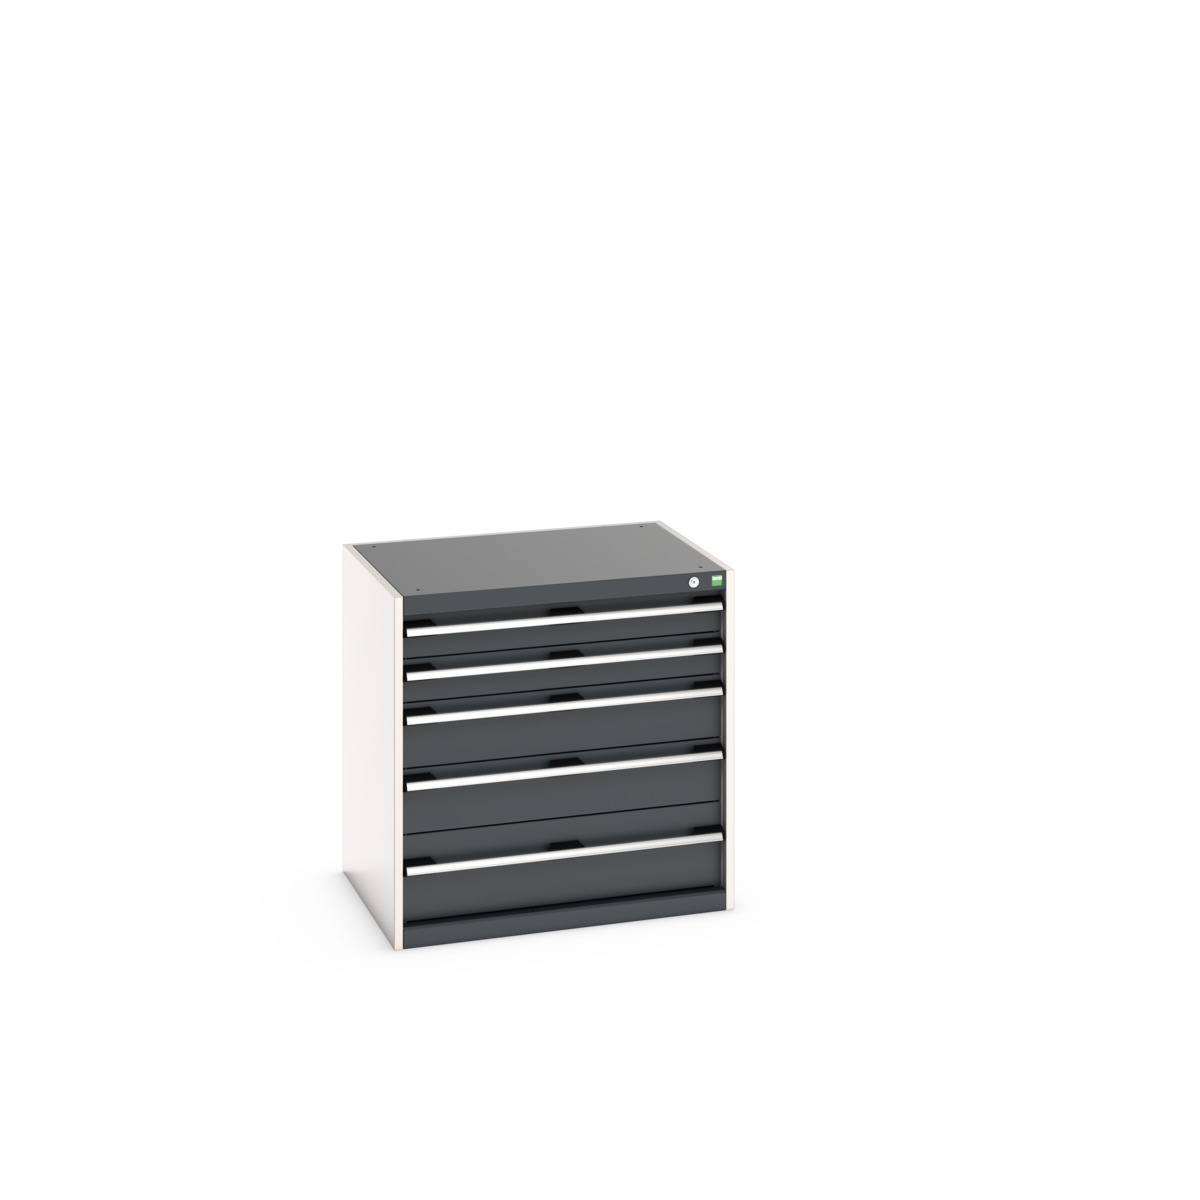 40020026. - cubio drawer cabinet